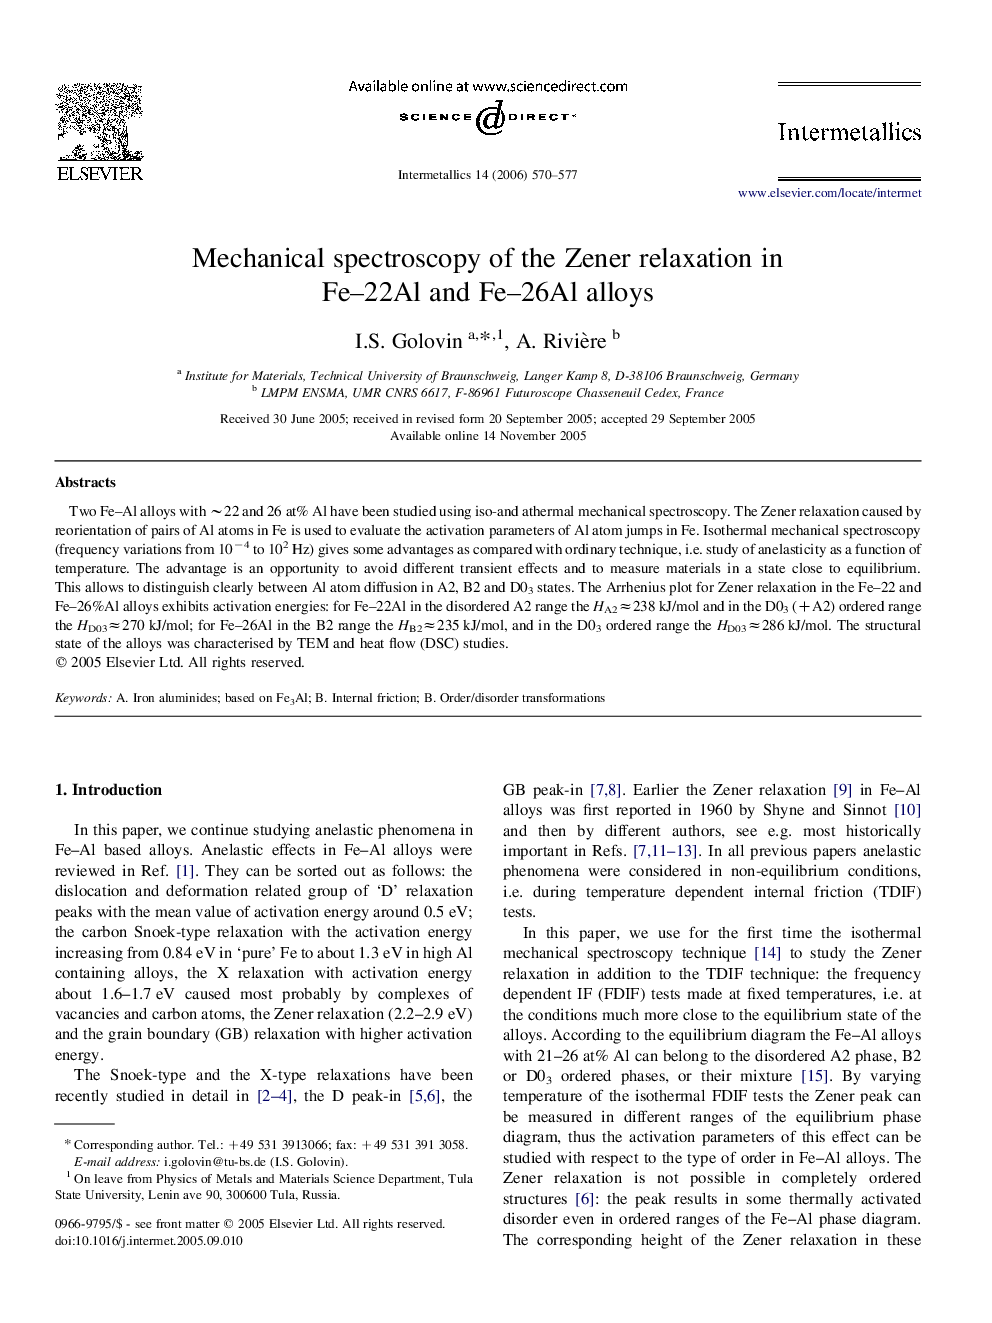 Mechanical spectroscopy of the Zener relaxation in Fe-22Al and Fe-26Al alloys